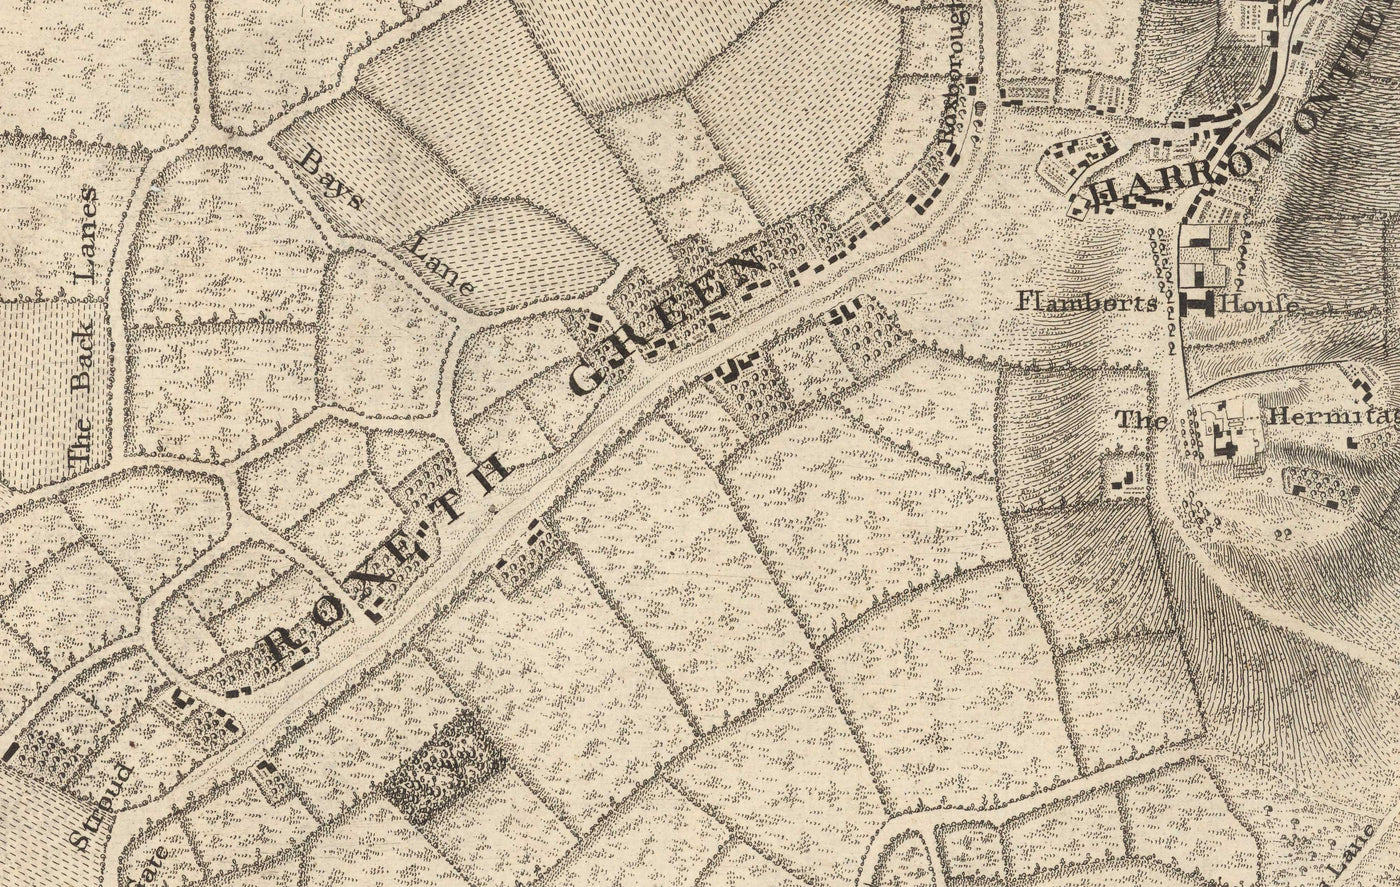 Old Map of North West London in 1746 by John Rocque - Wembley, Preston, Alperton, Northolt, Roxeth Green, W3, W5, W7,W13, NW10